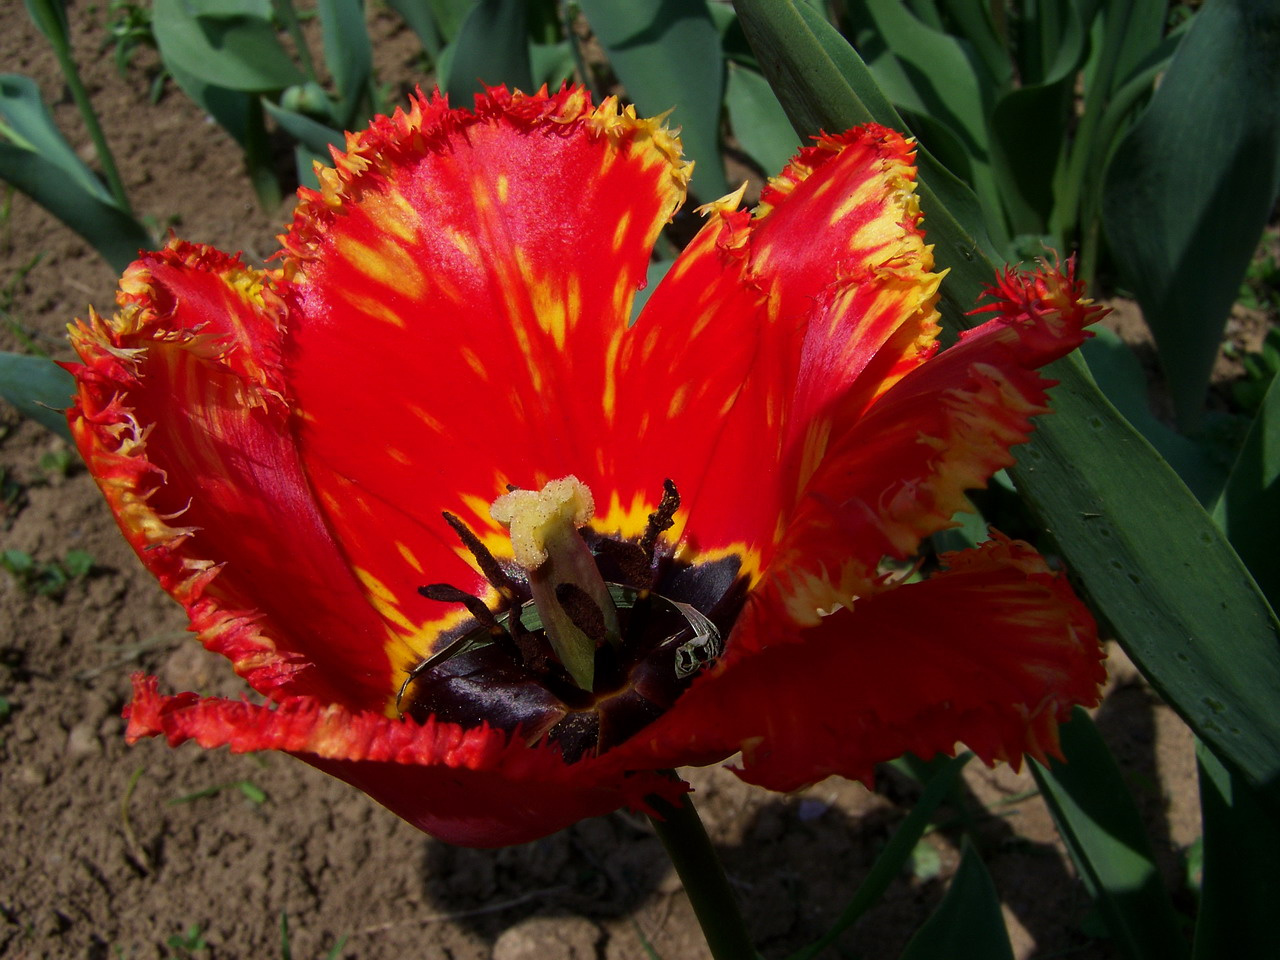 tulipán, sárgával fröccsentett